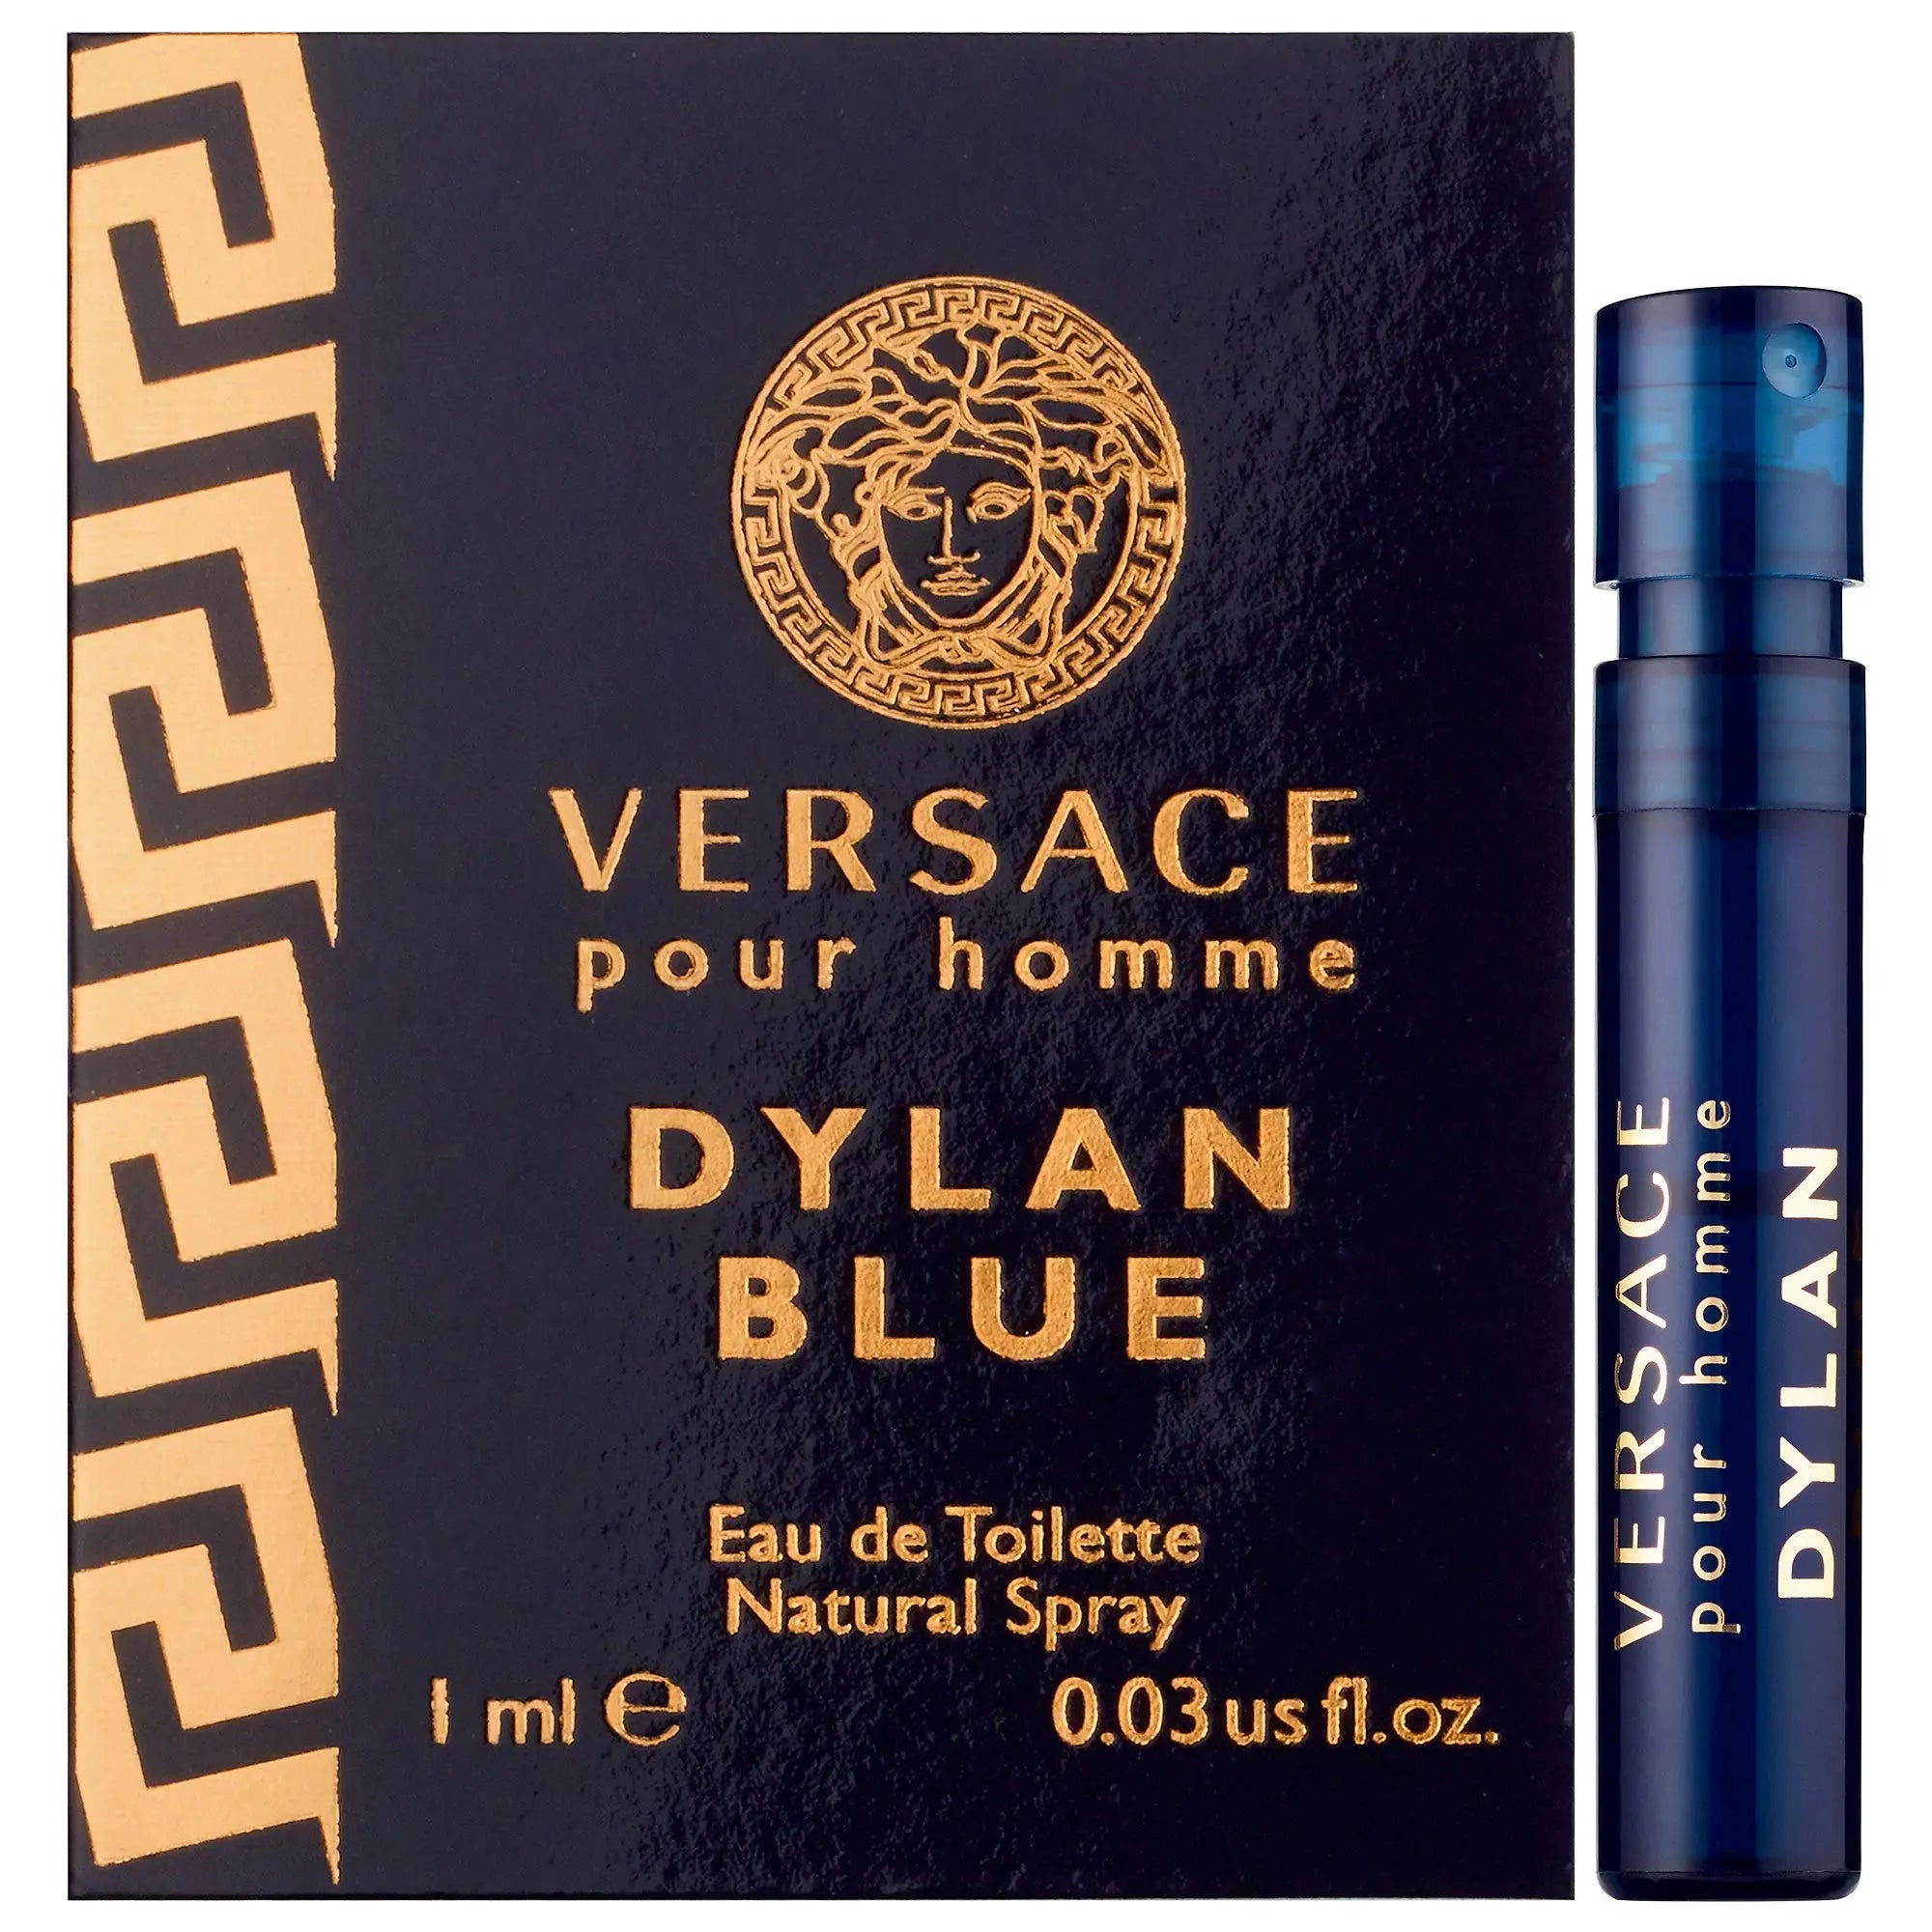 Versace Pour Homme Dylan Blue EDT Sample 1ml Male Fragrance sample